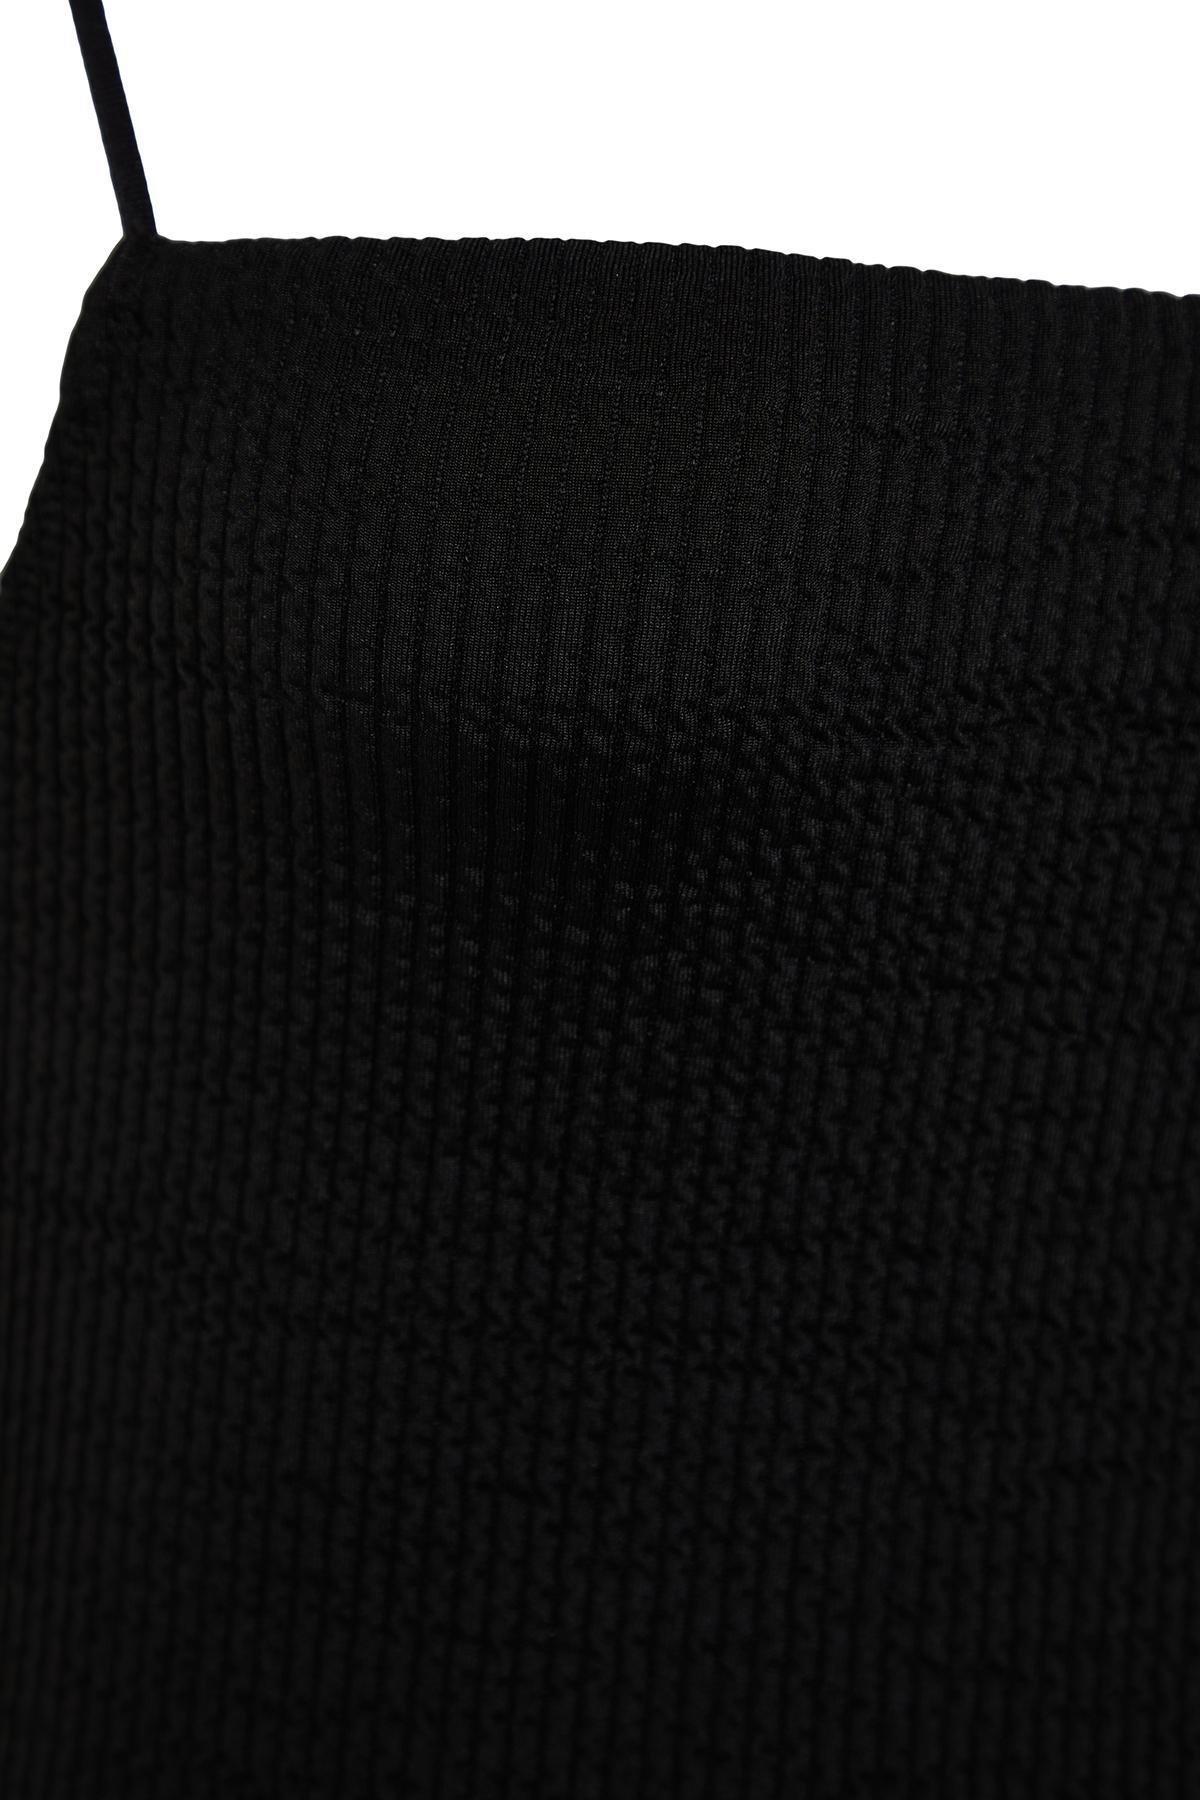 Trendyol - Black Square Neck Textured Swimsuit